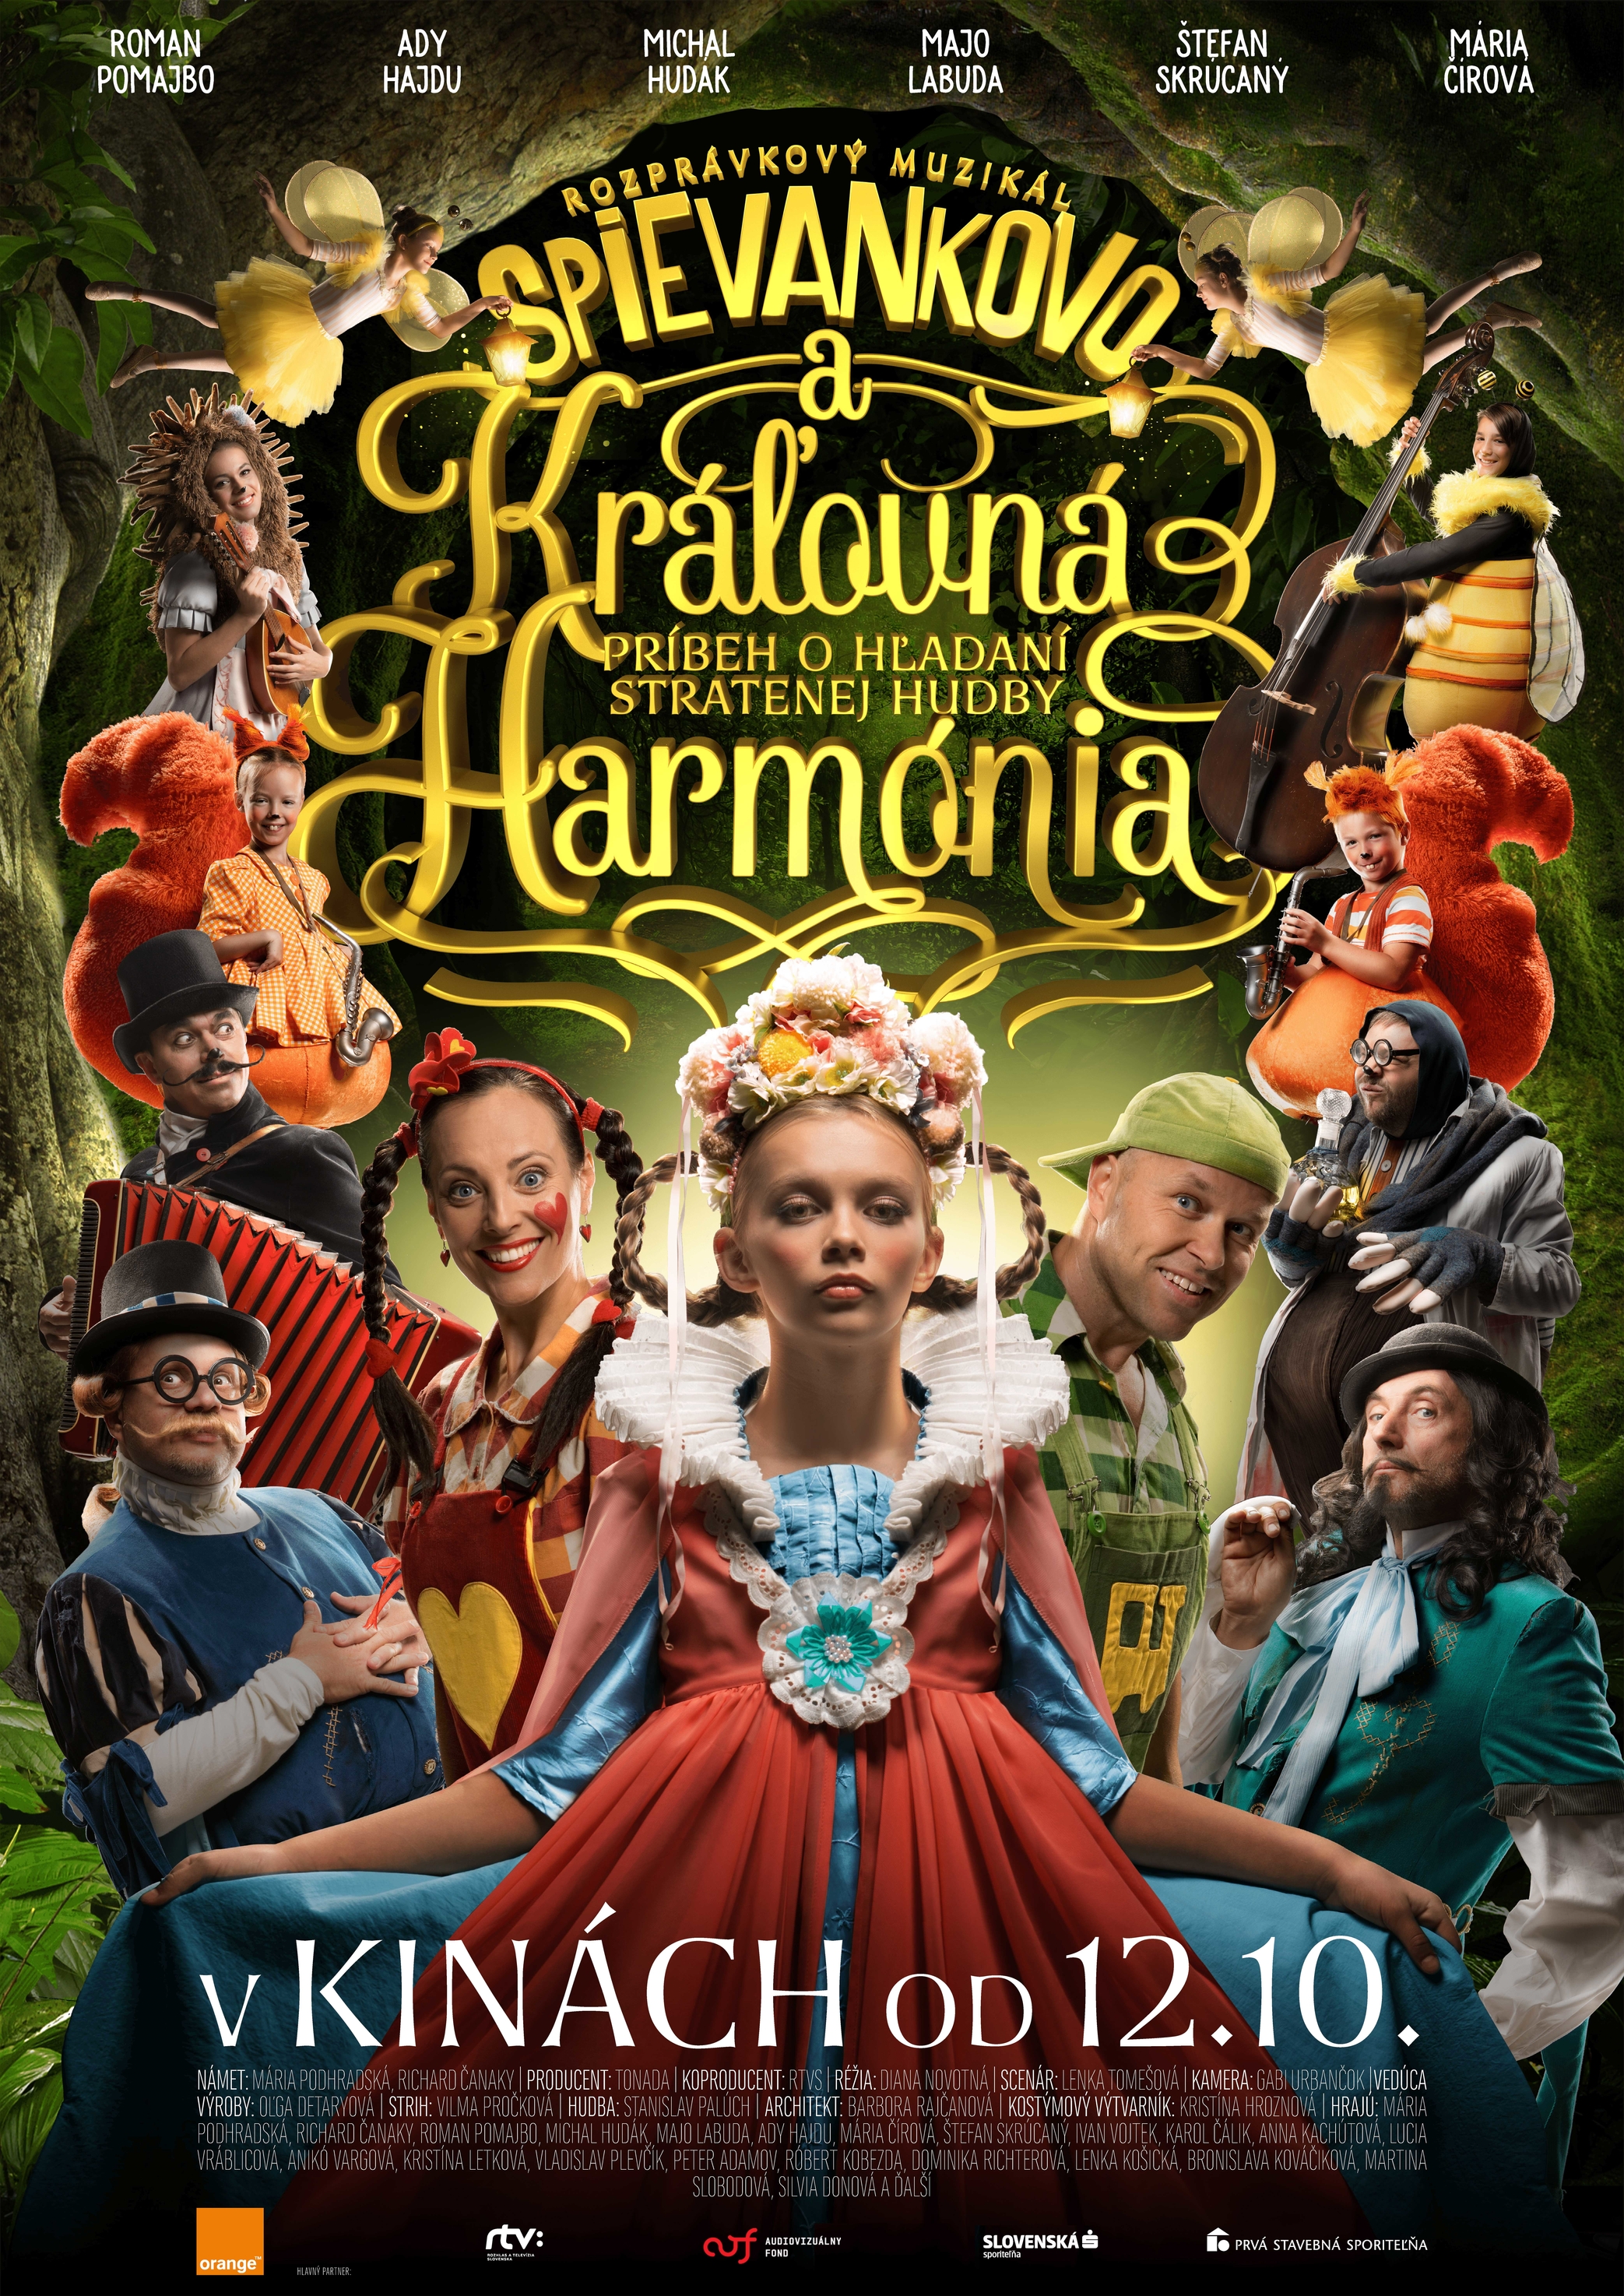 Spievankovo A Kralovna Harmonia (2017) Main Poster